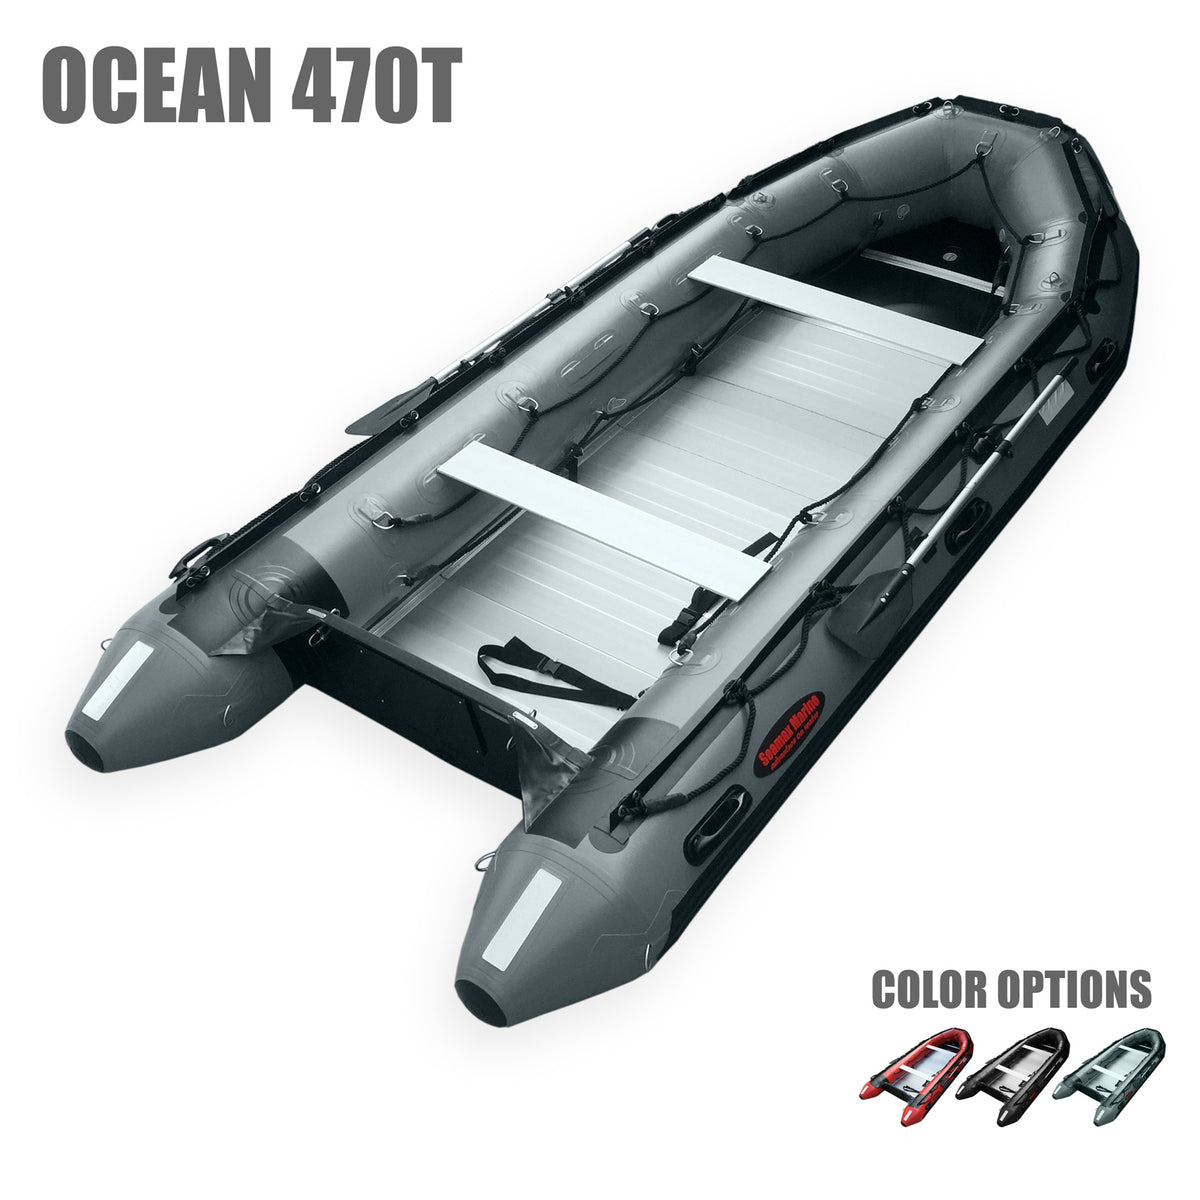 Seamax Ocean 470T 15.5 Feet Commercial Grade Inflatable Boat - Seamax Marine